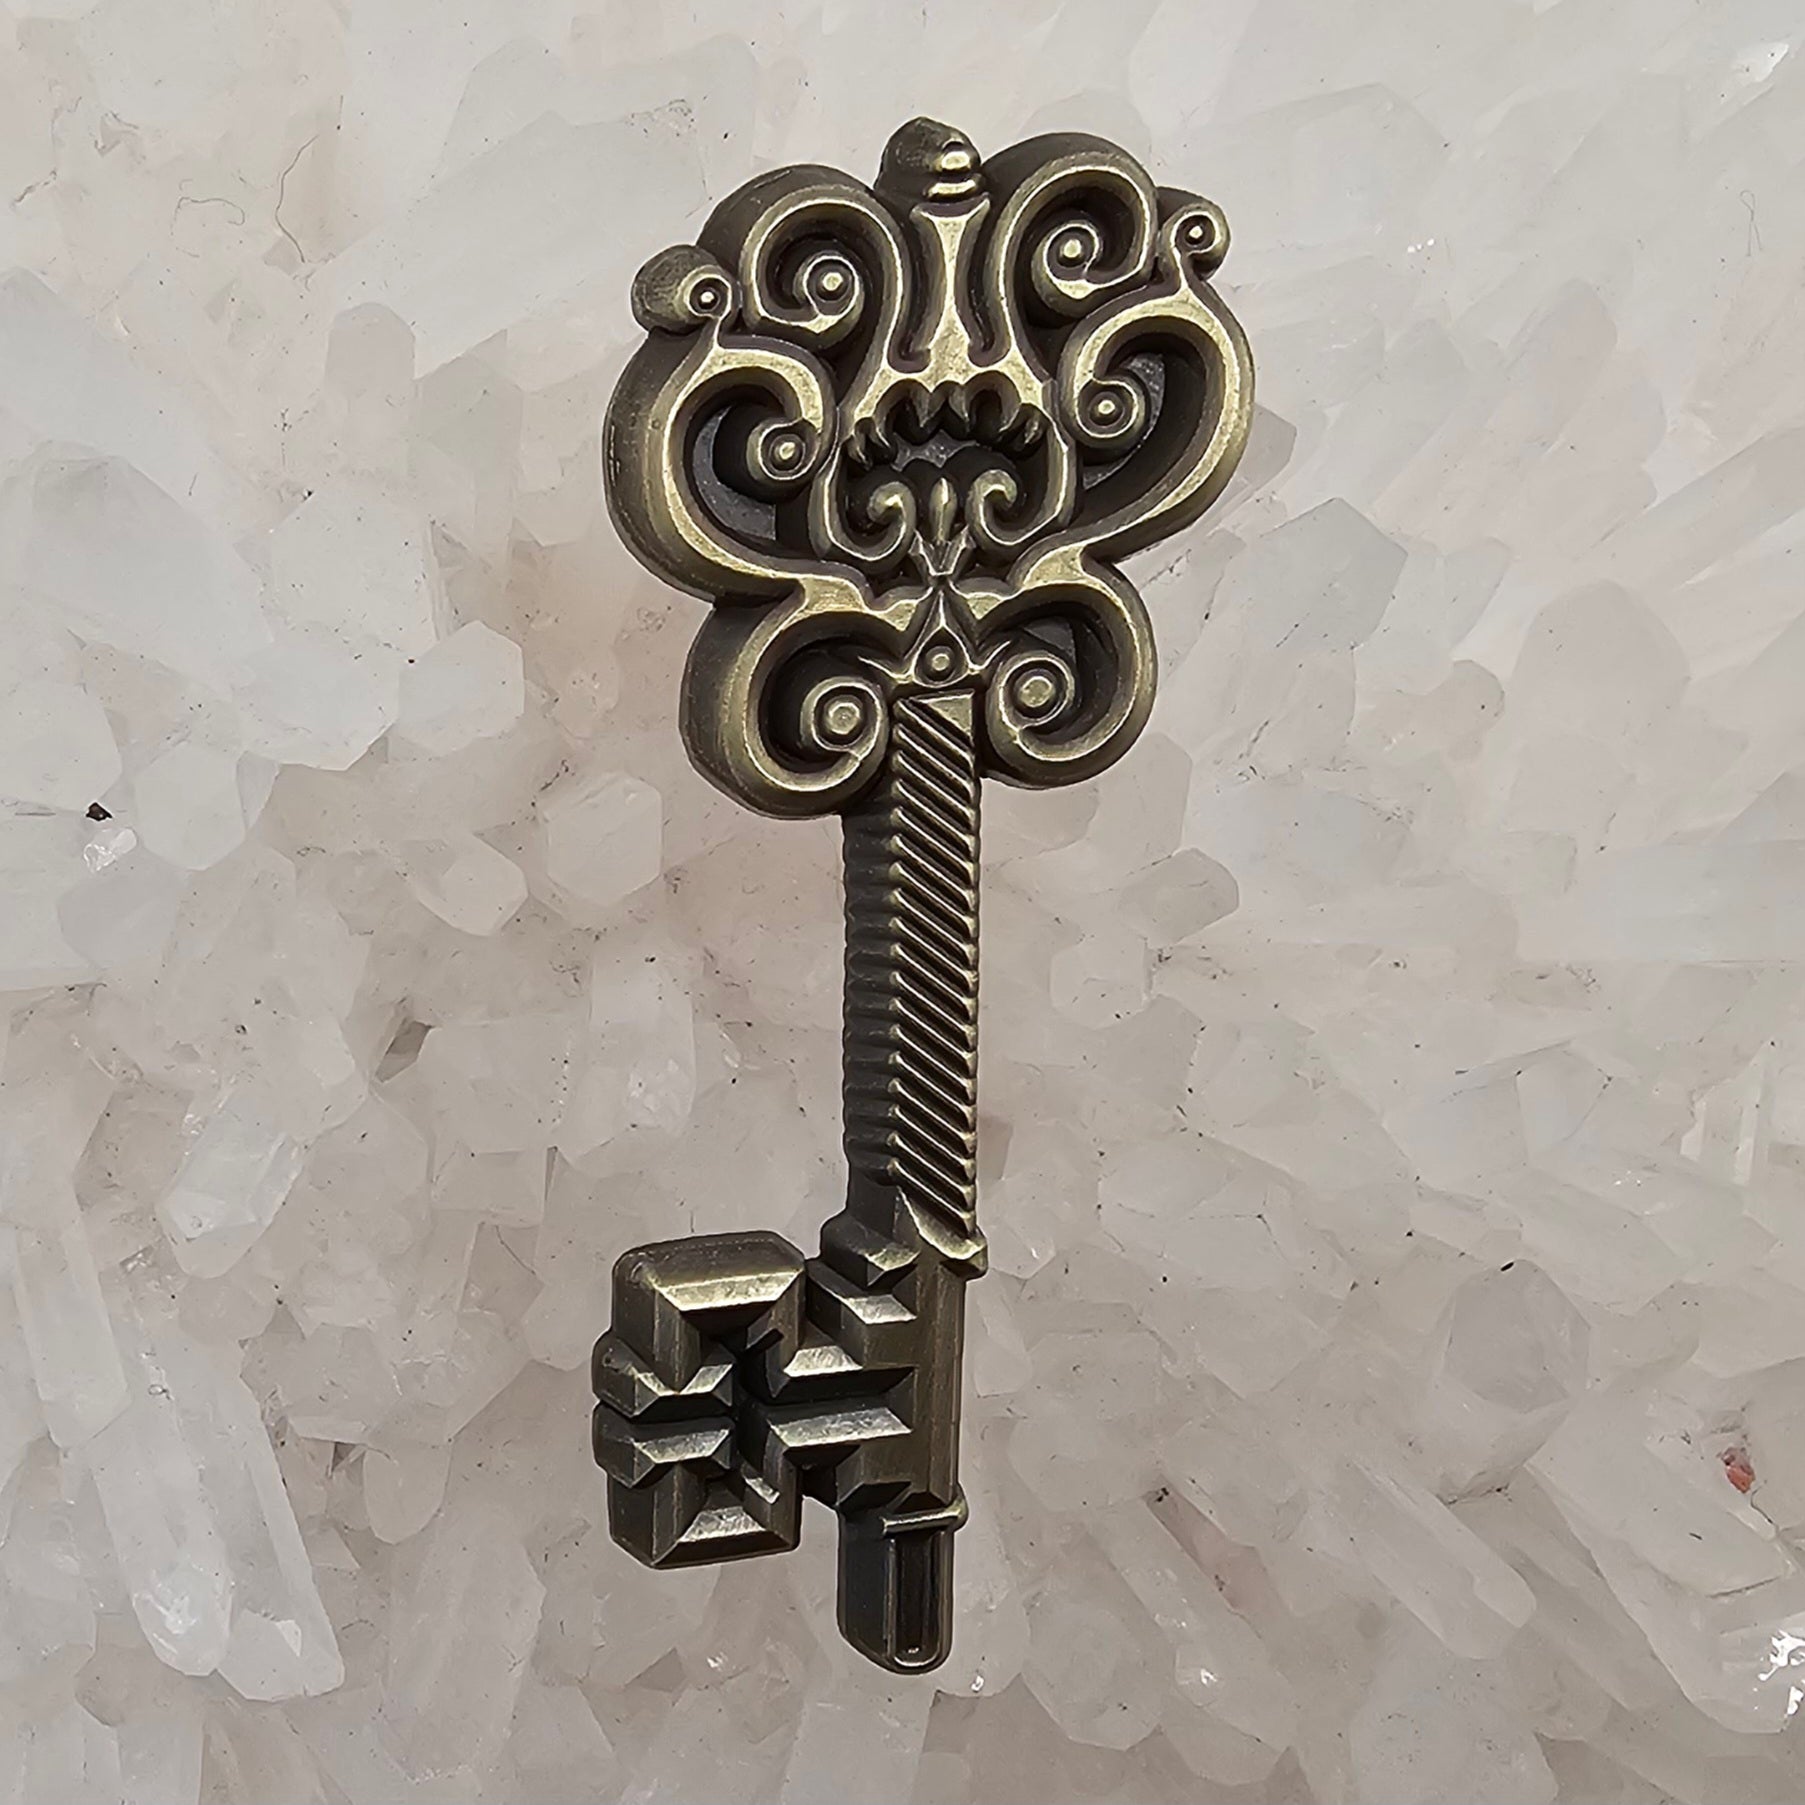 3D Bronze Skeleton Key Mini Spoon Enamel Pins Hat Pins Lapel Pin Brooch Badge Festival Pin